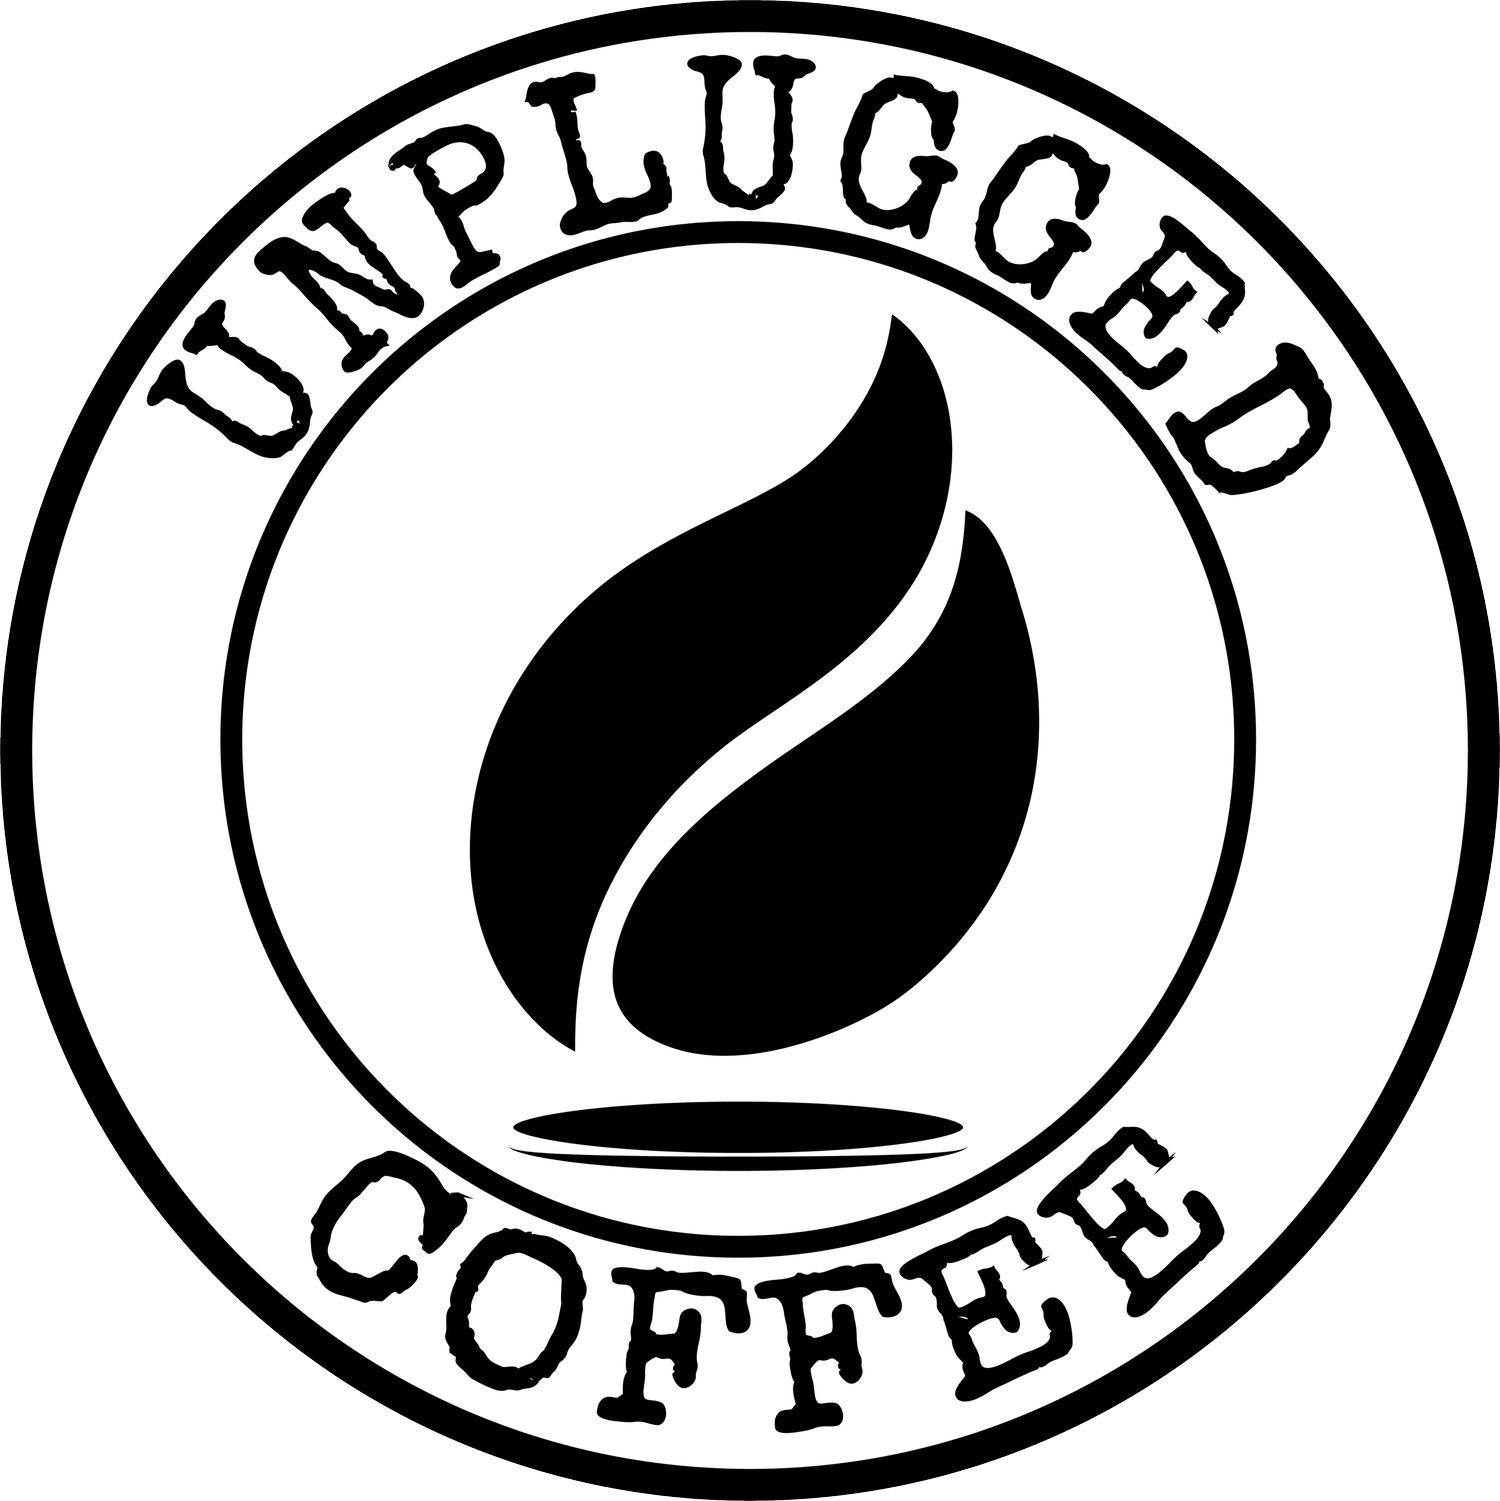 UNPLUGGED COFFEE CO.